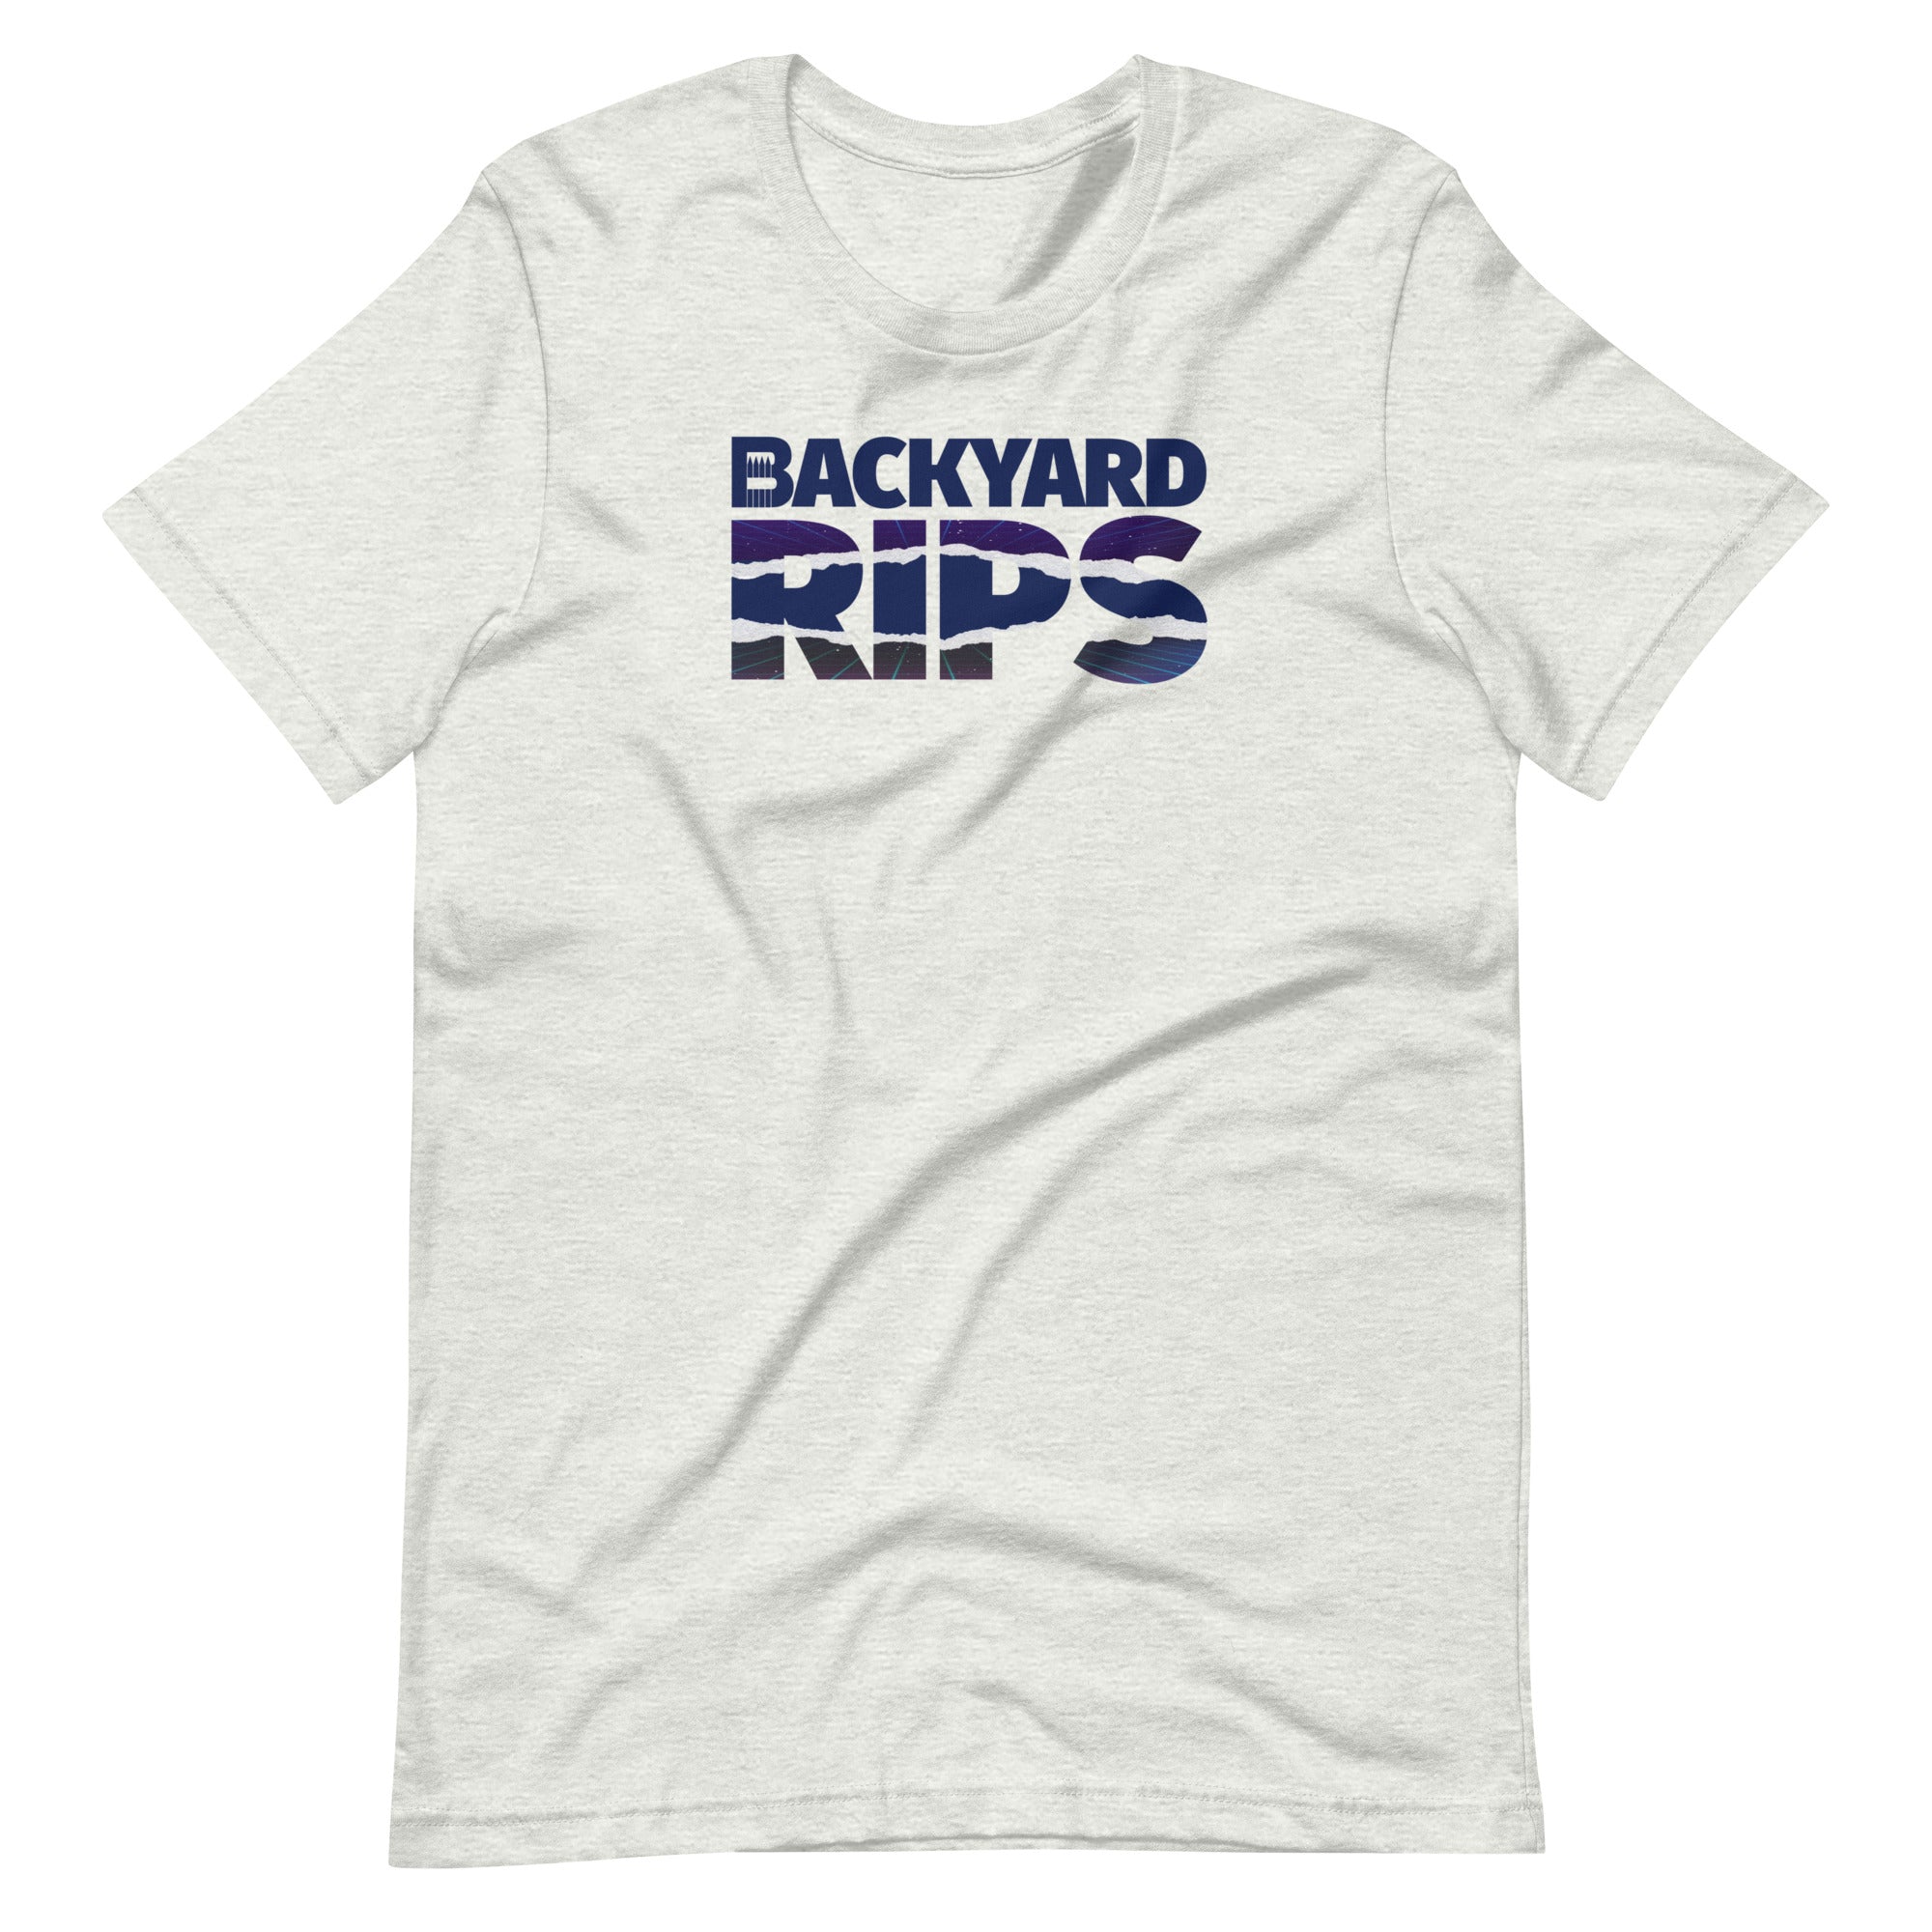 Backyard Rips Unisex t-shirt